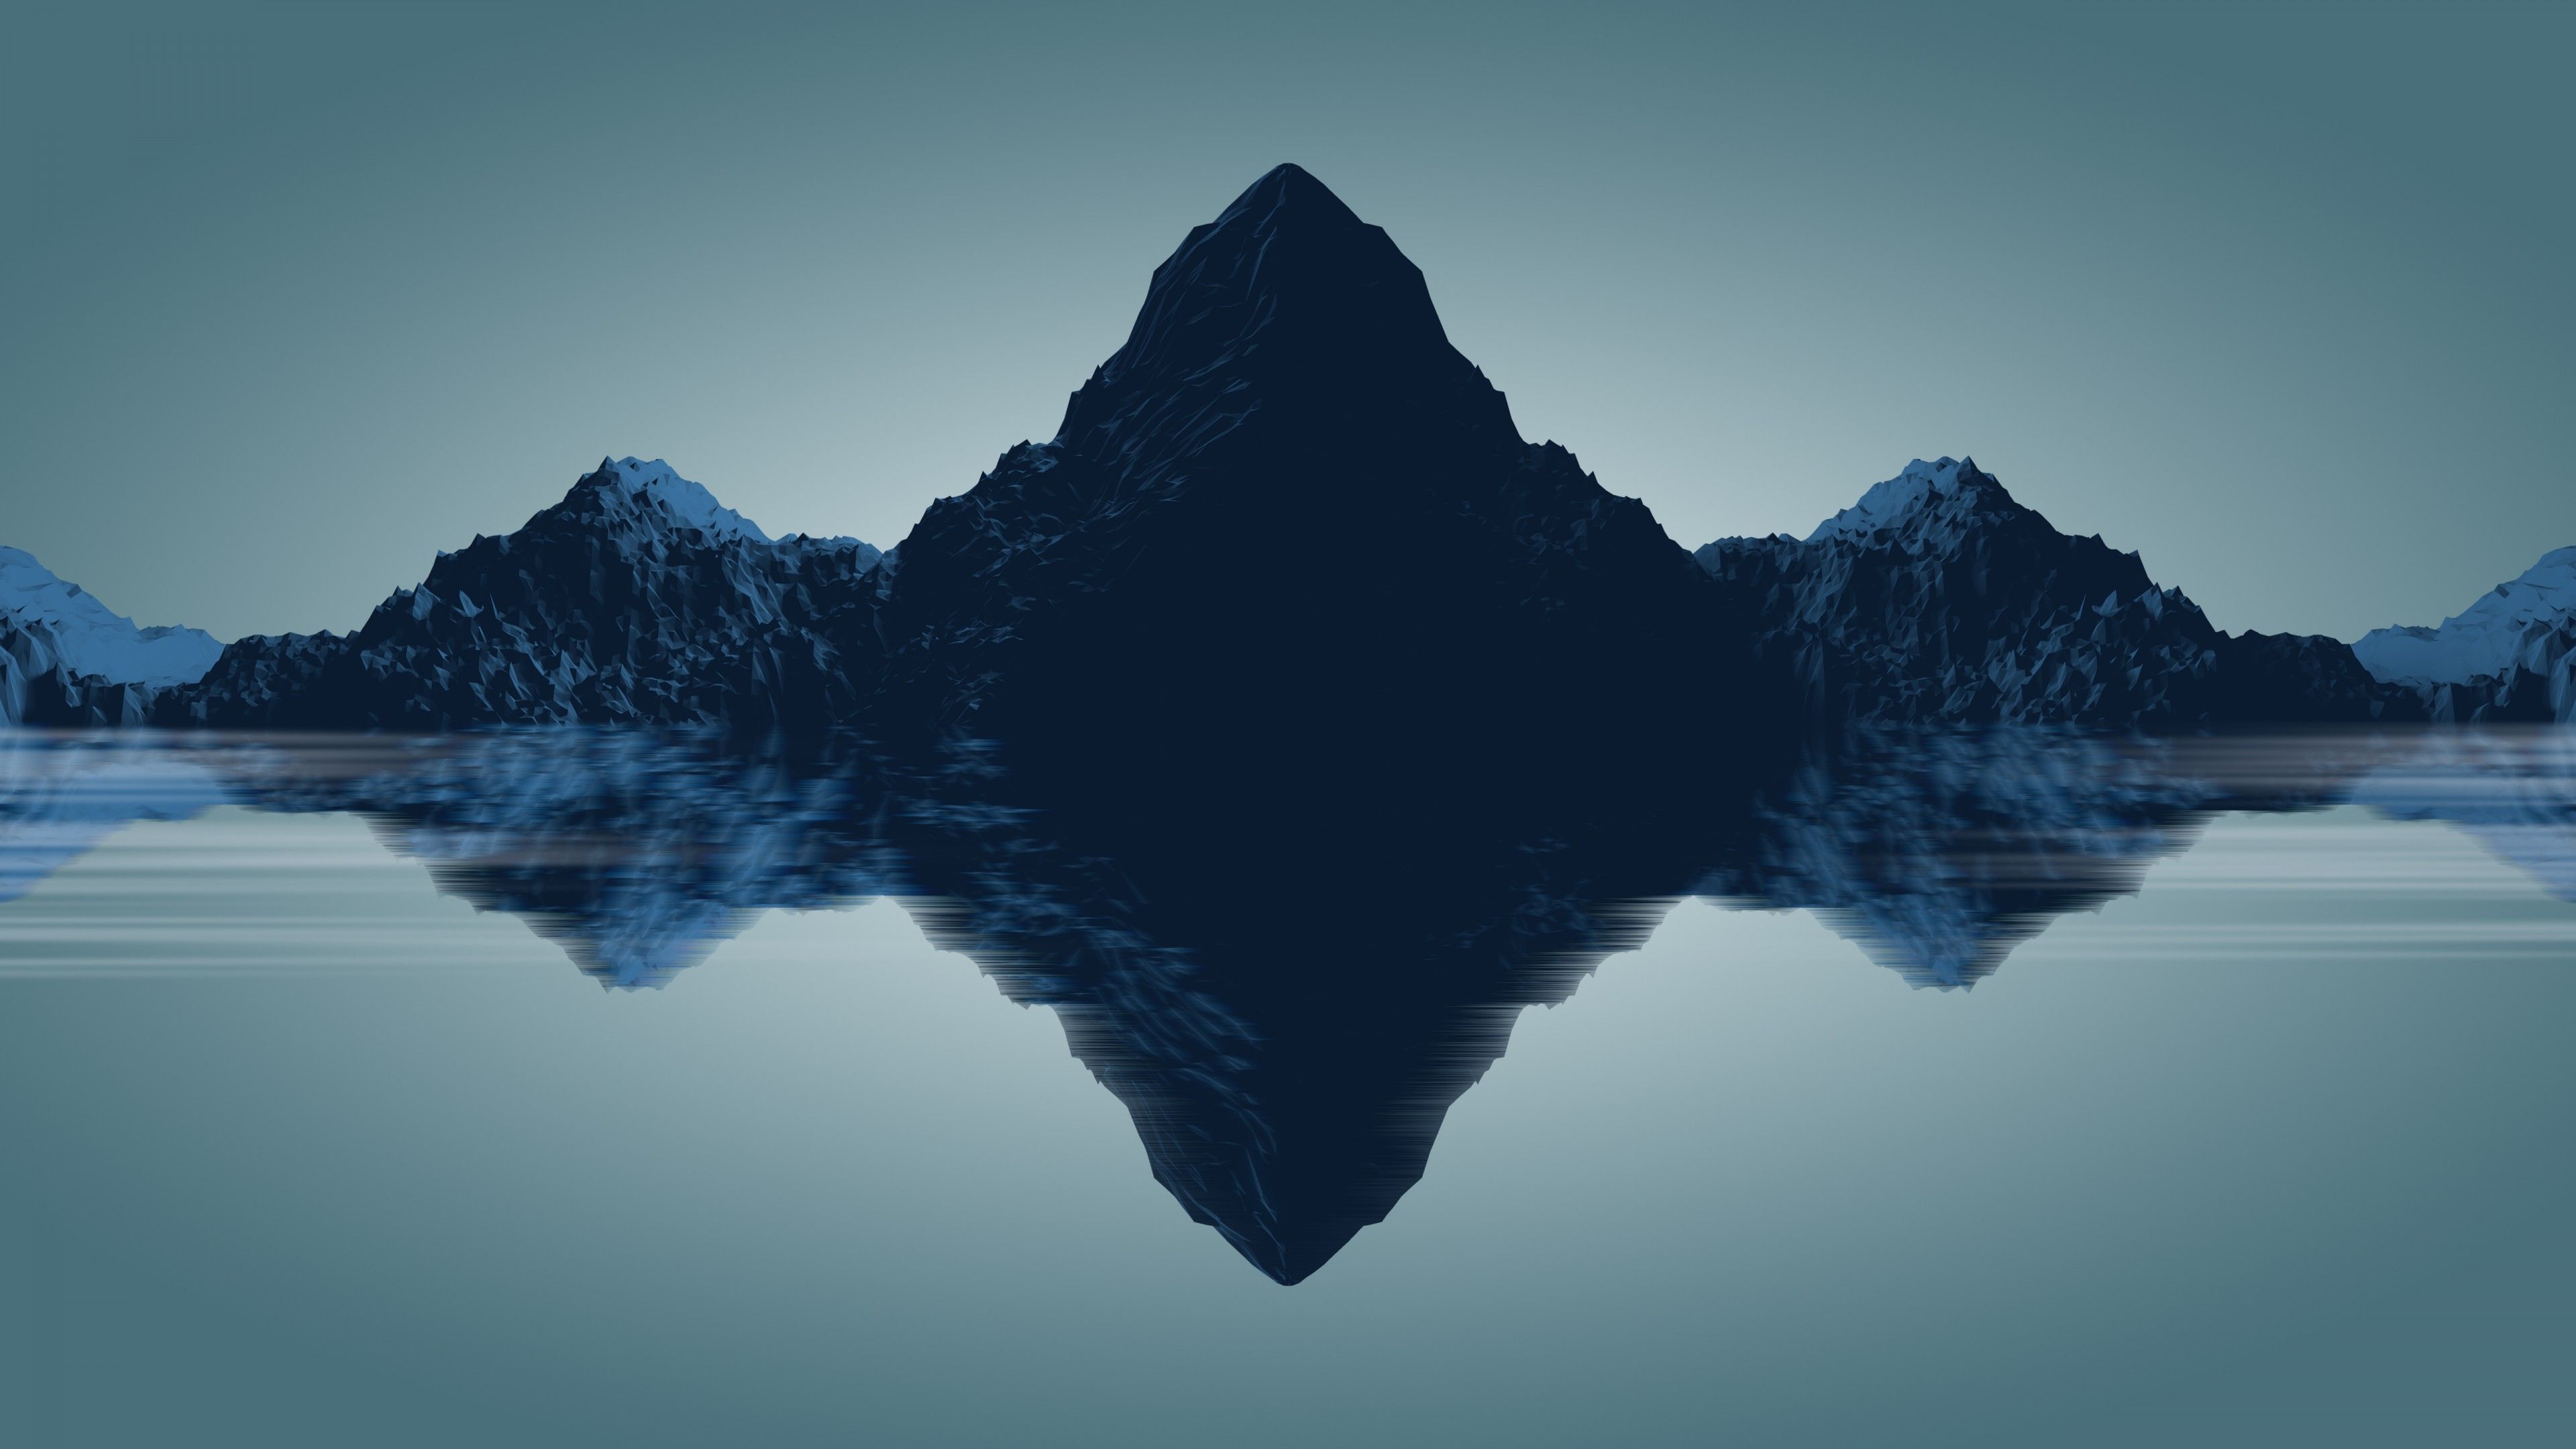 Mountains 4K Wallpaper, Reflections, Minimal, Render, Digital